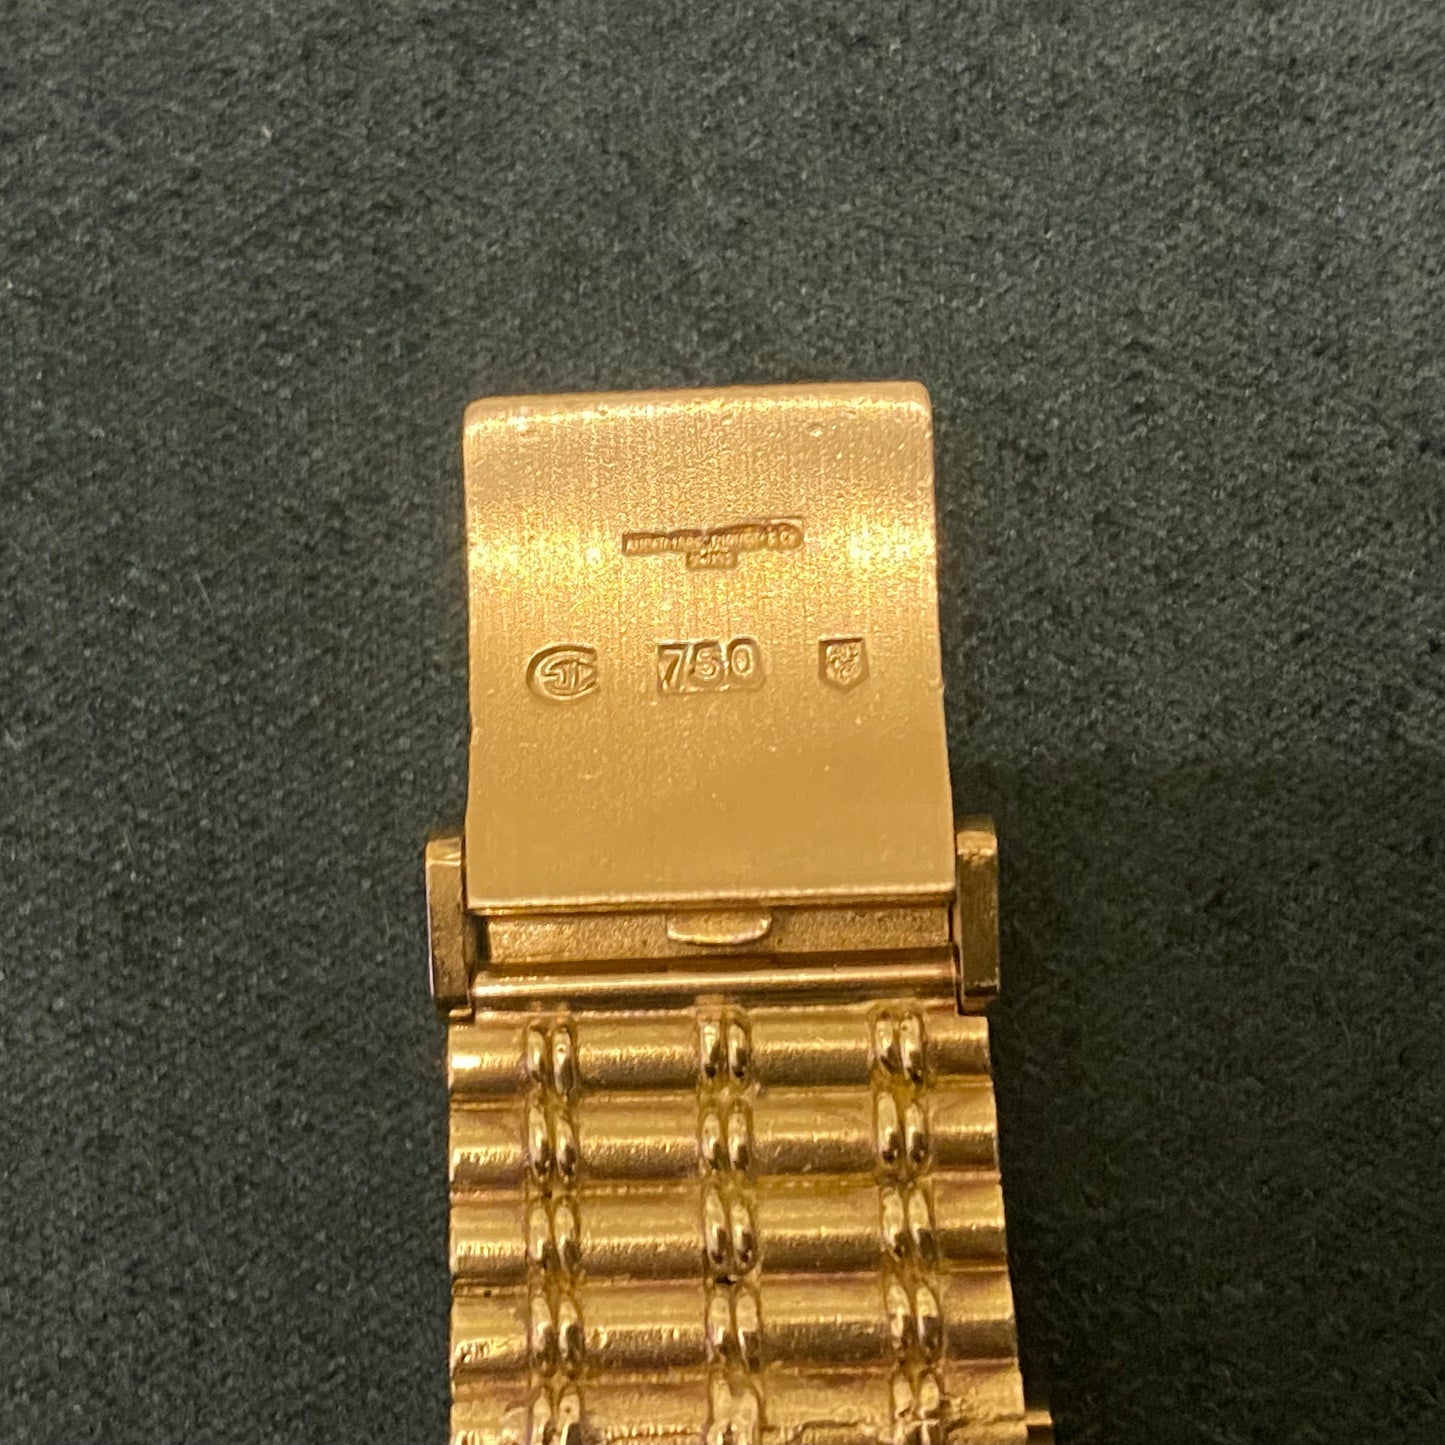 Audemars Piguet Bamboo Paved Diamond QZ Watch - PM Vintage Watches -